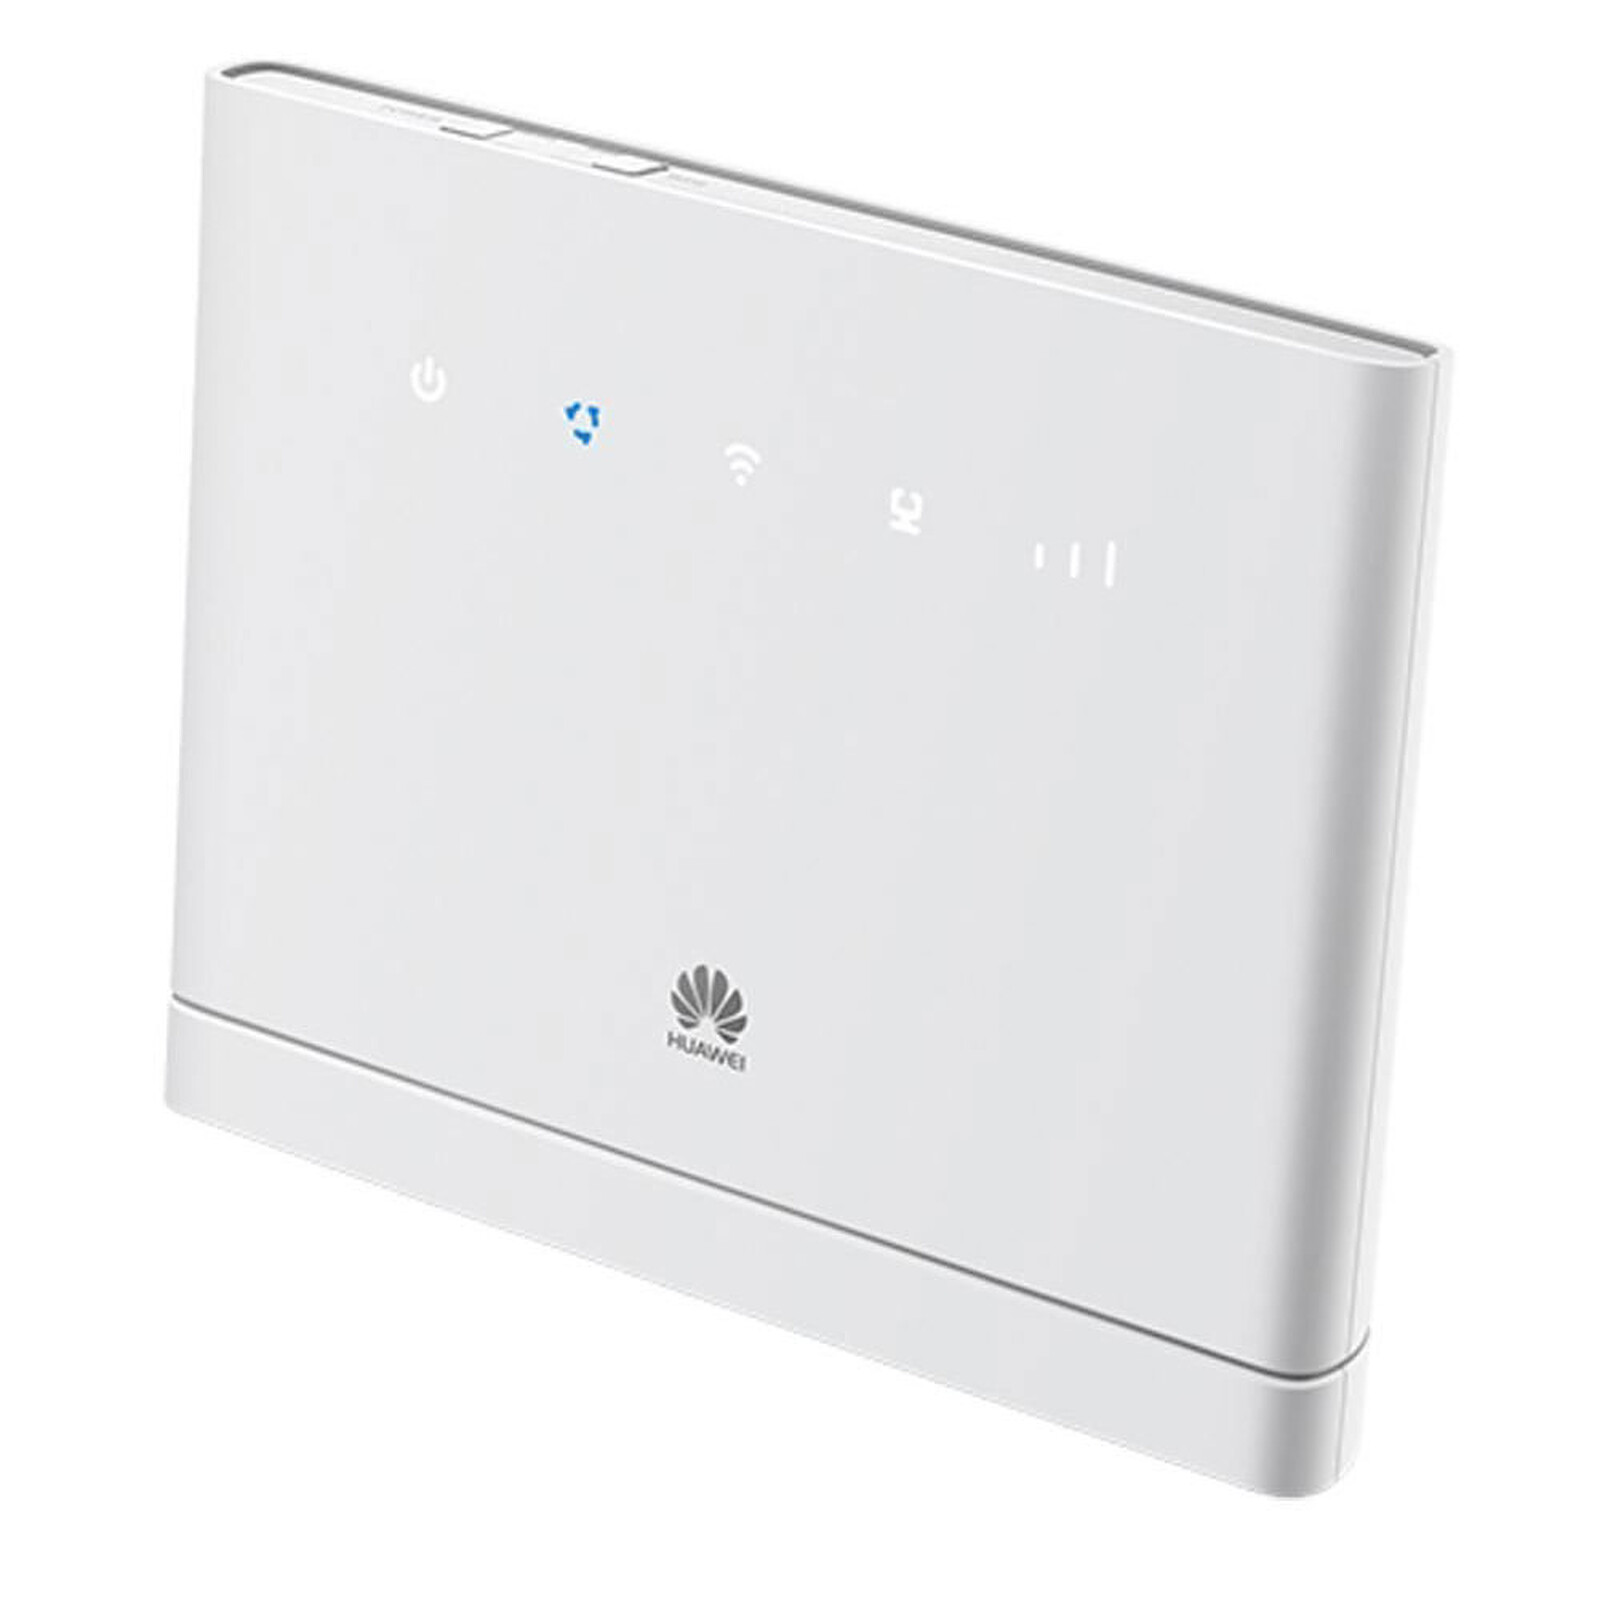 Huawei B315S-22 Blanc - Modem & routeur - Garantie 3 ans LDLC